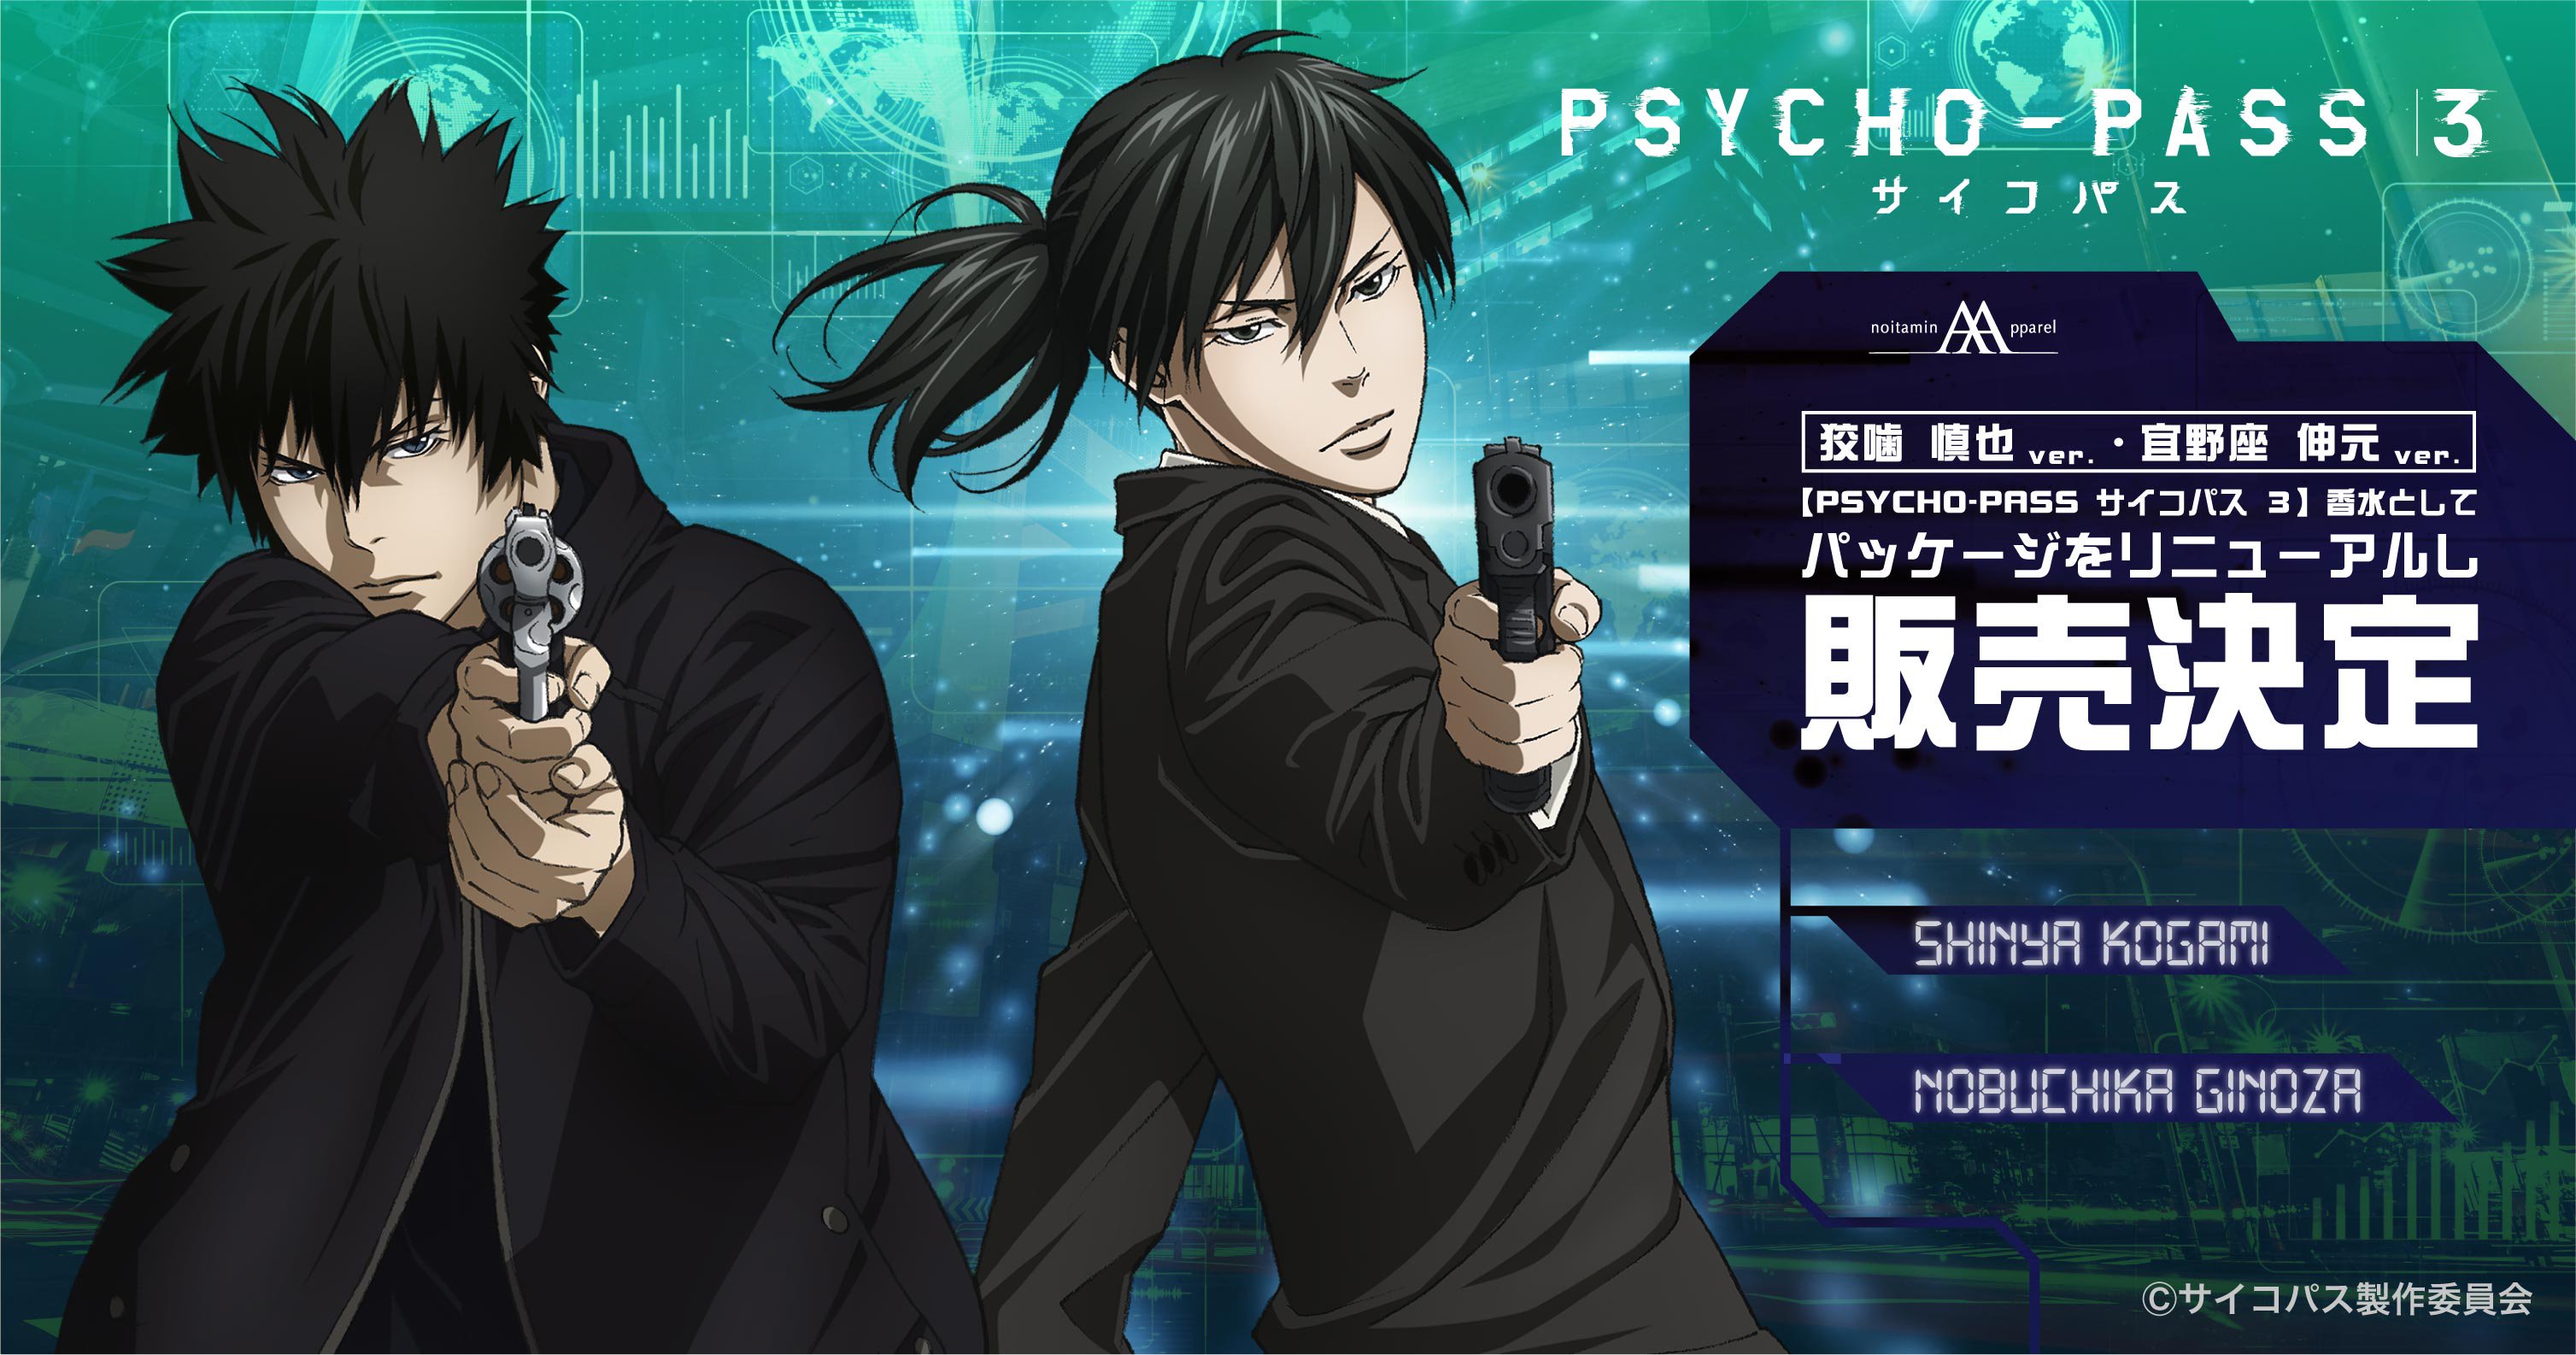 Psycho Pass サイコパス 3 香水 宜野座伸元セレクション Noitamina Apparel